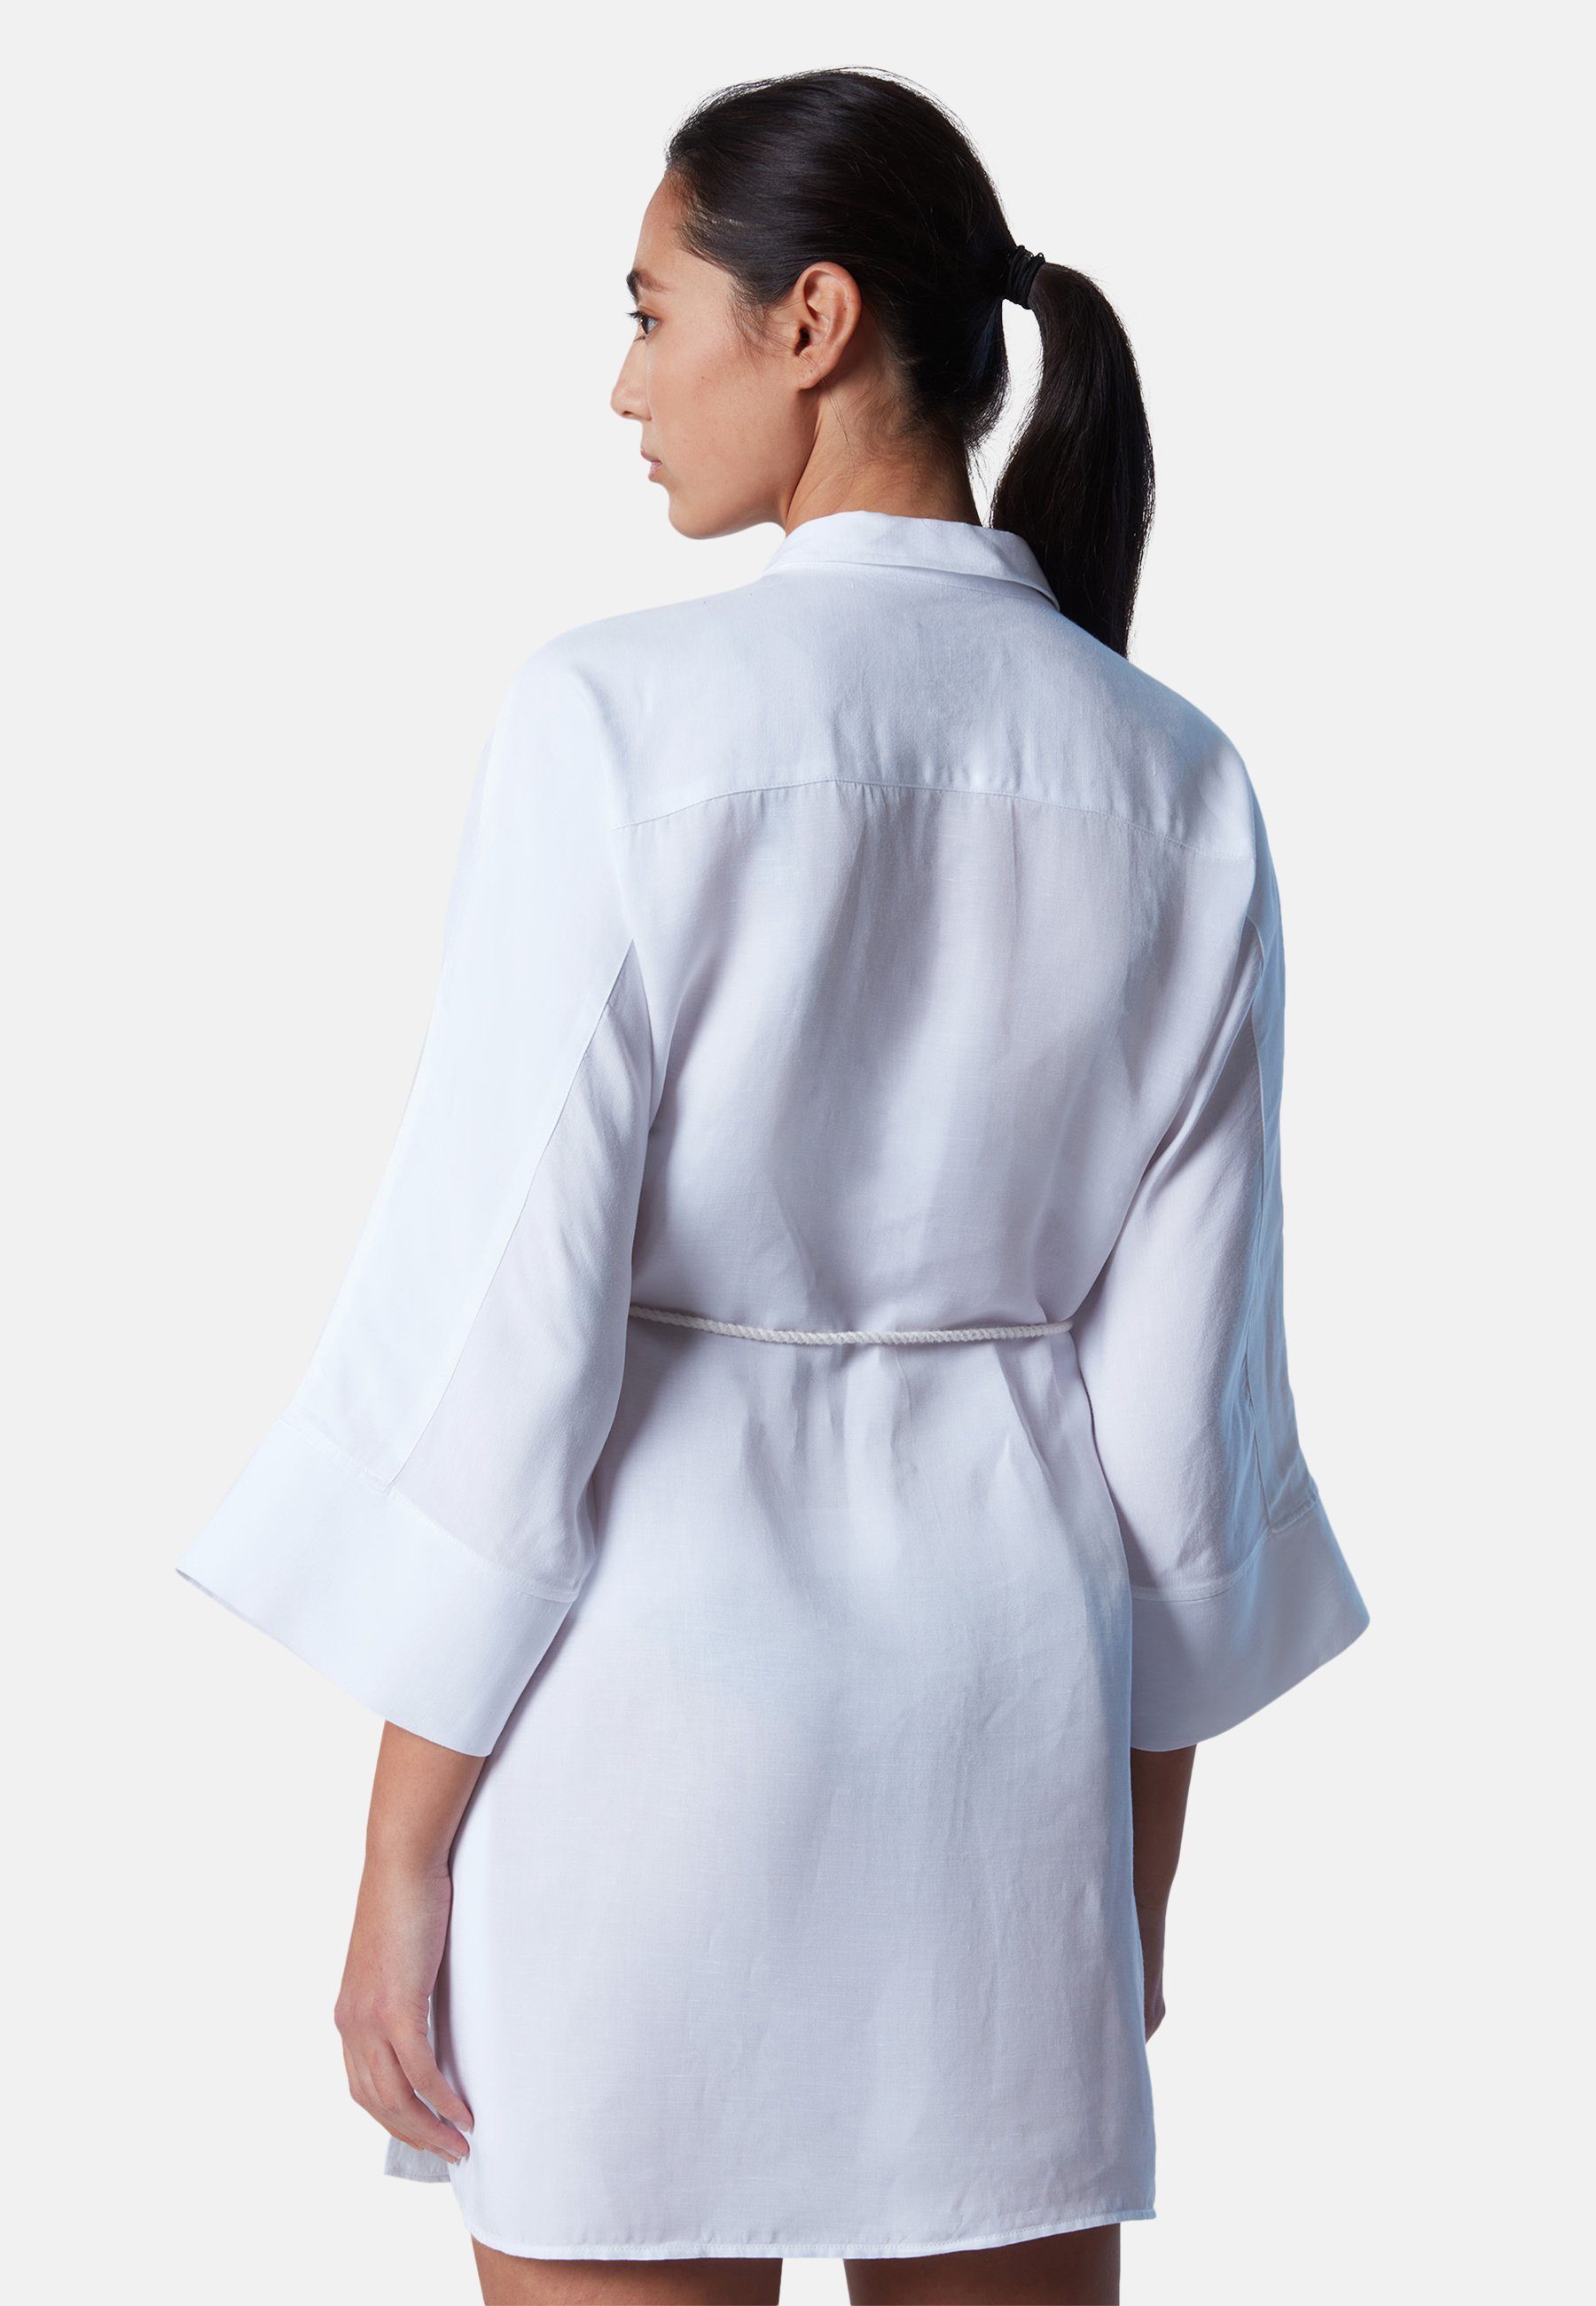 North Sails Shirtkleid Kimono-Hemdblusenkleid Design klassischem mit White